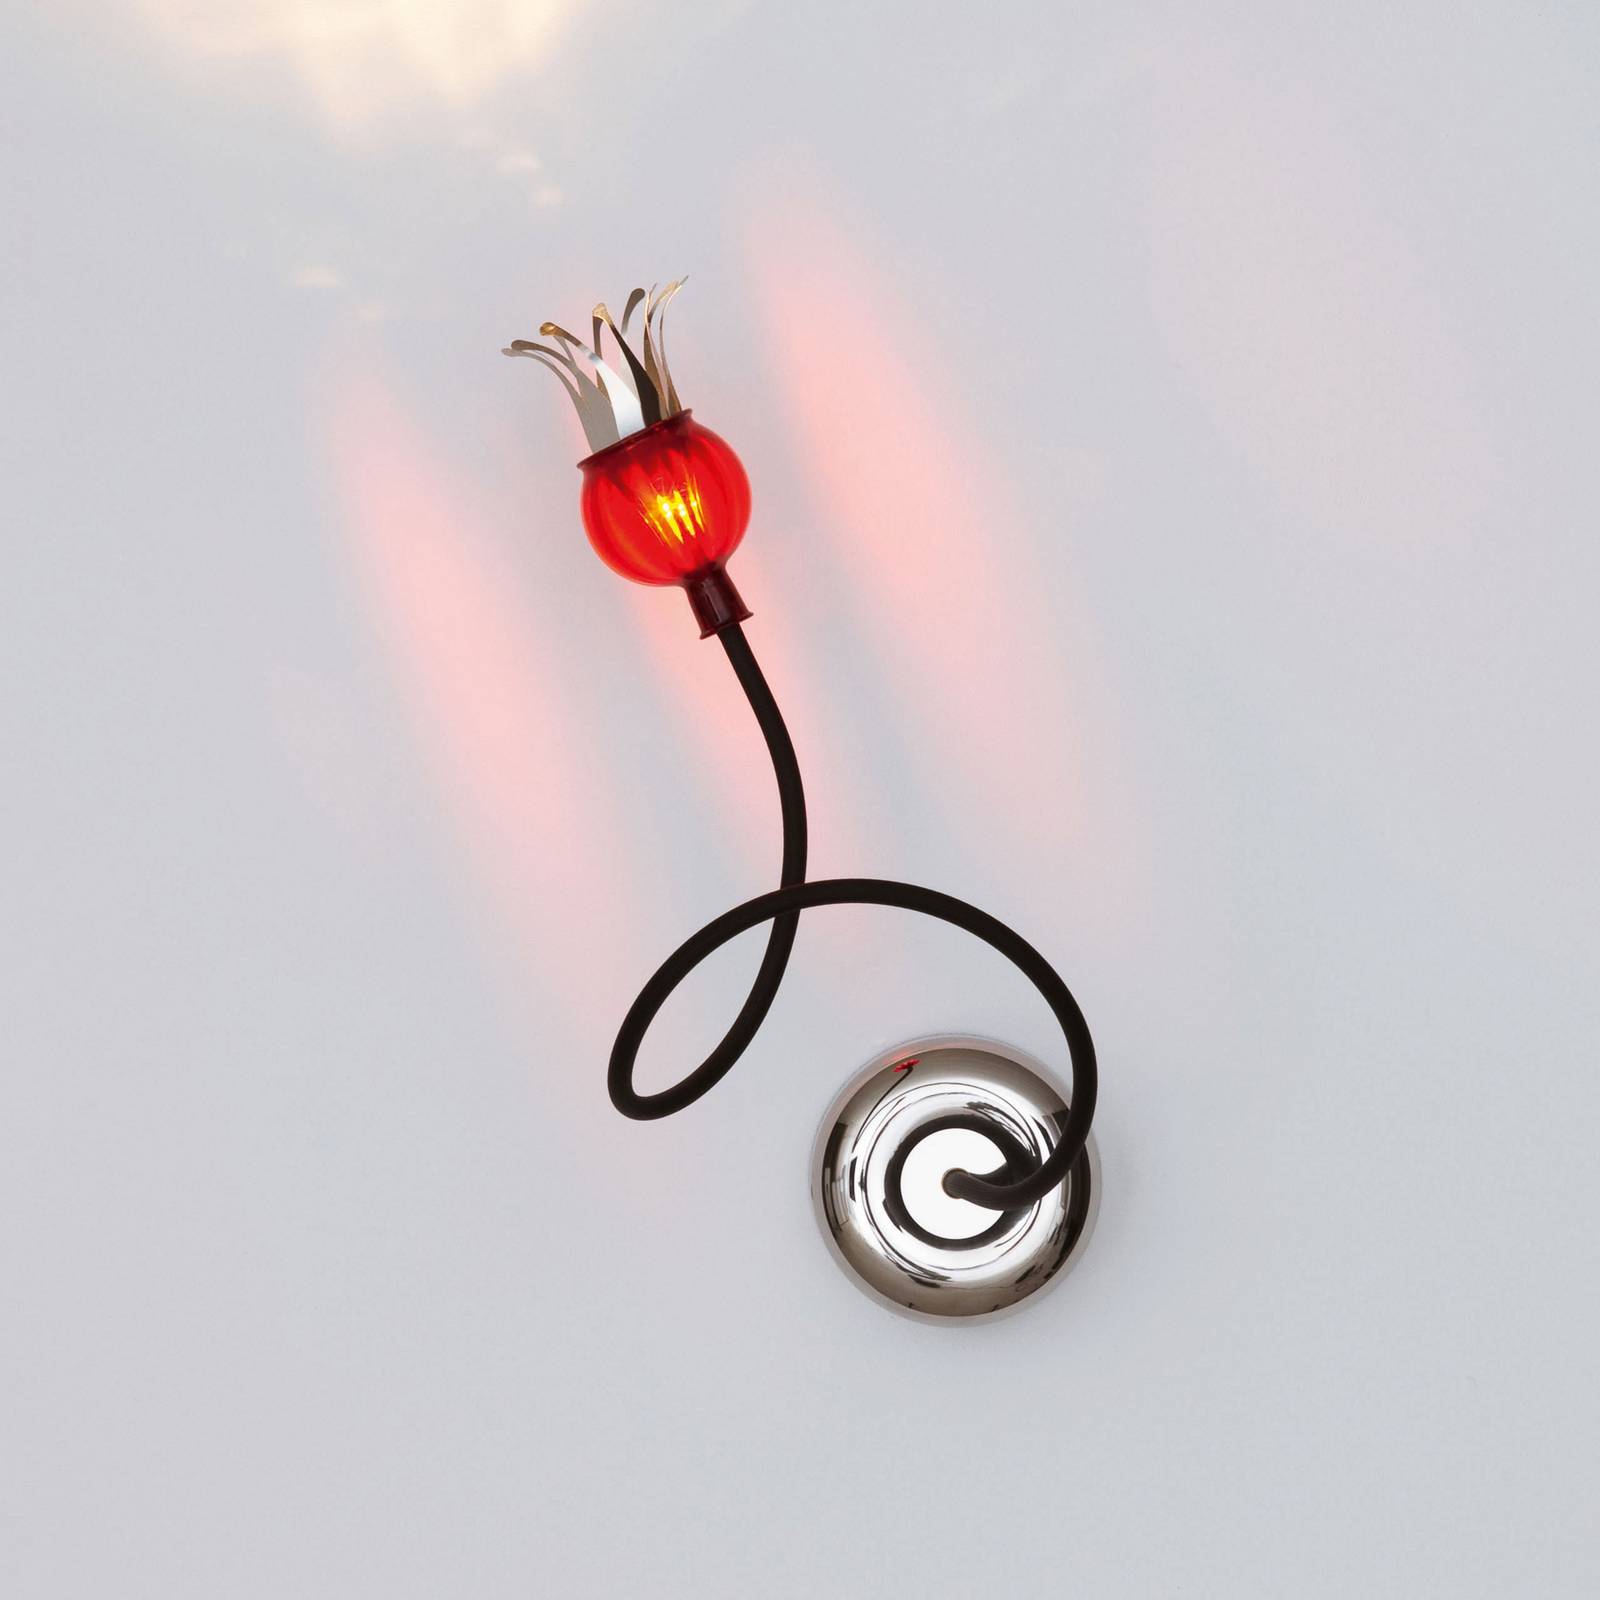 Image of Serien Lighting serien.lighting Poppy plafond, 1 lampe noir/rouge rubis 